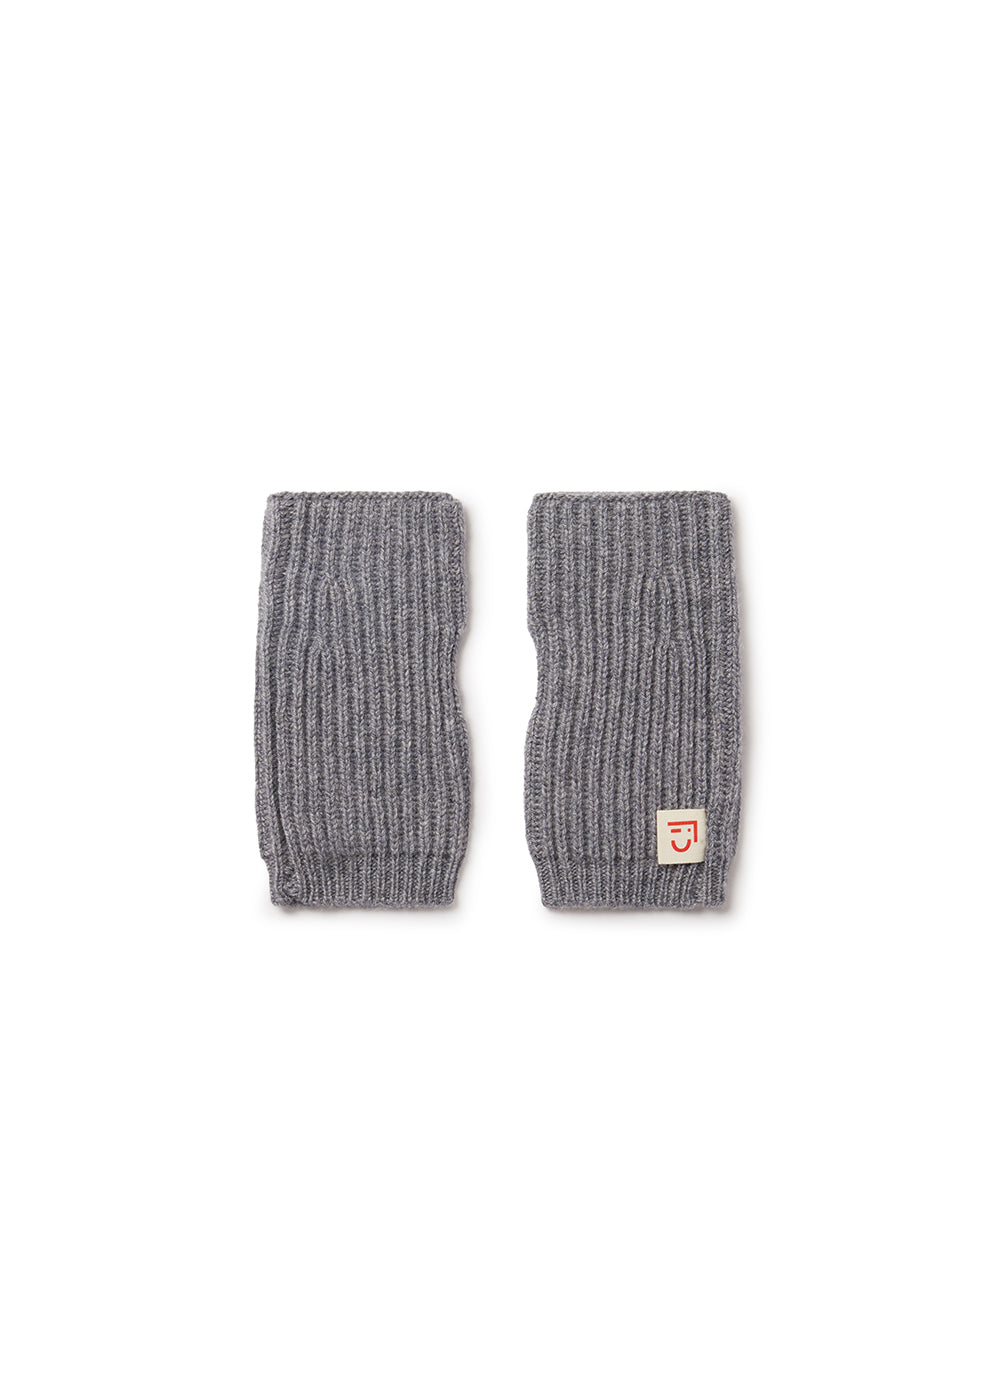 Laax Fingerless Mittens - One size / Grey